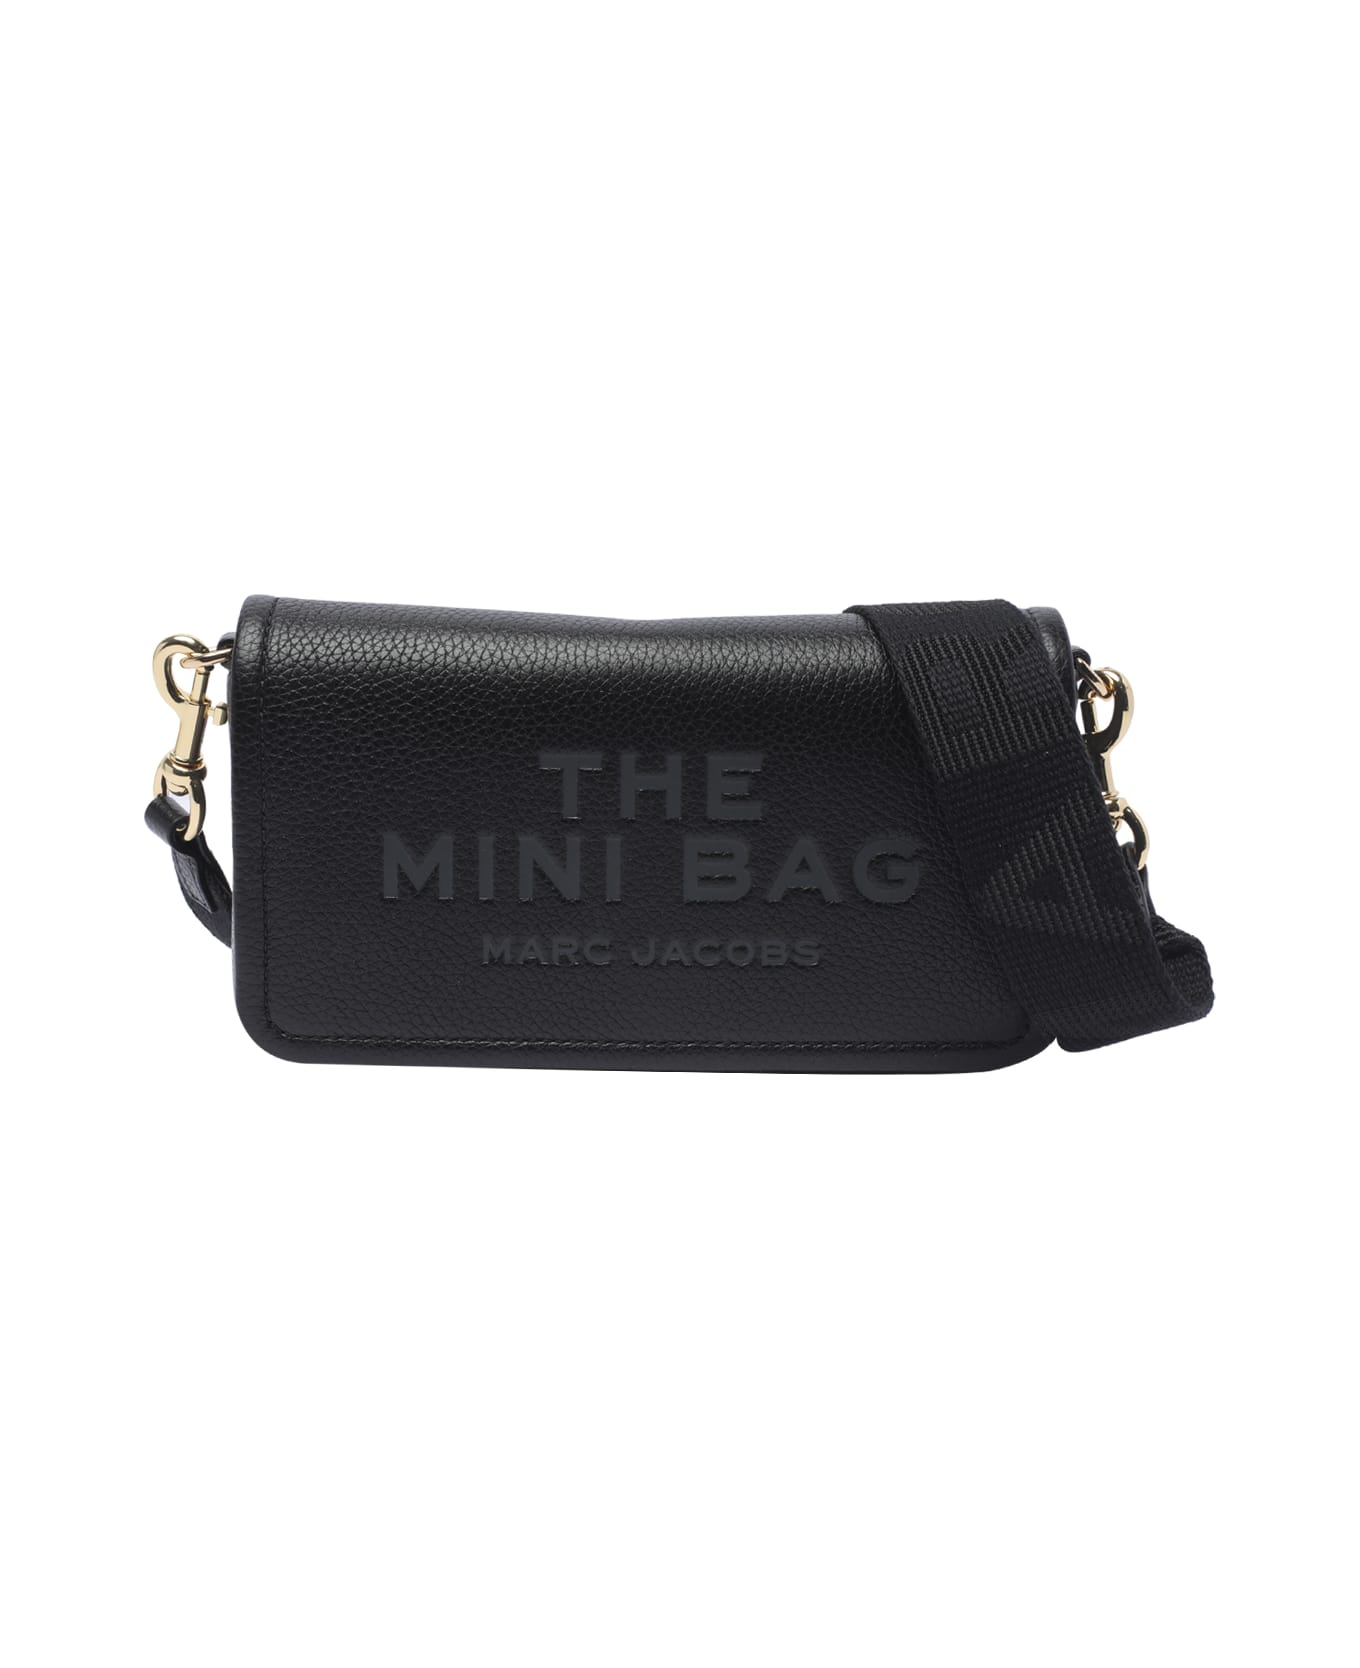 Marc Jacobs The Mini Bag Crossbody Bag - Nero